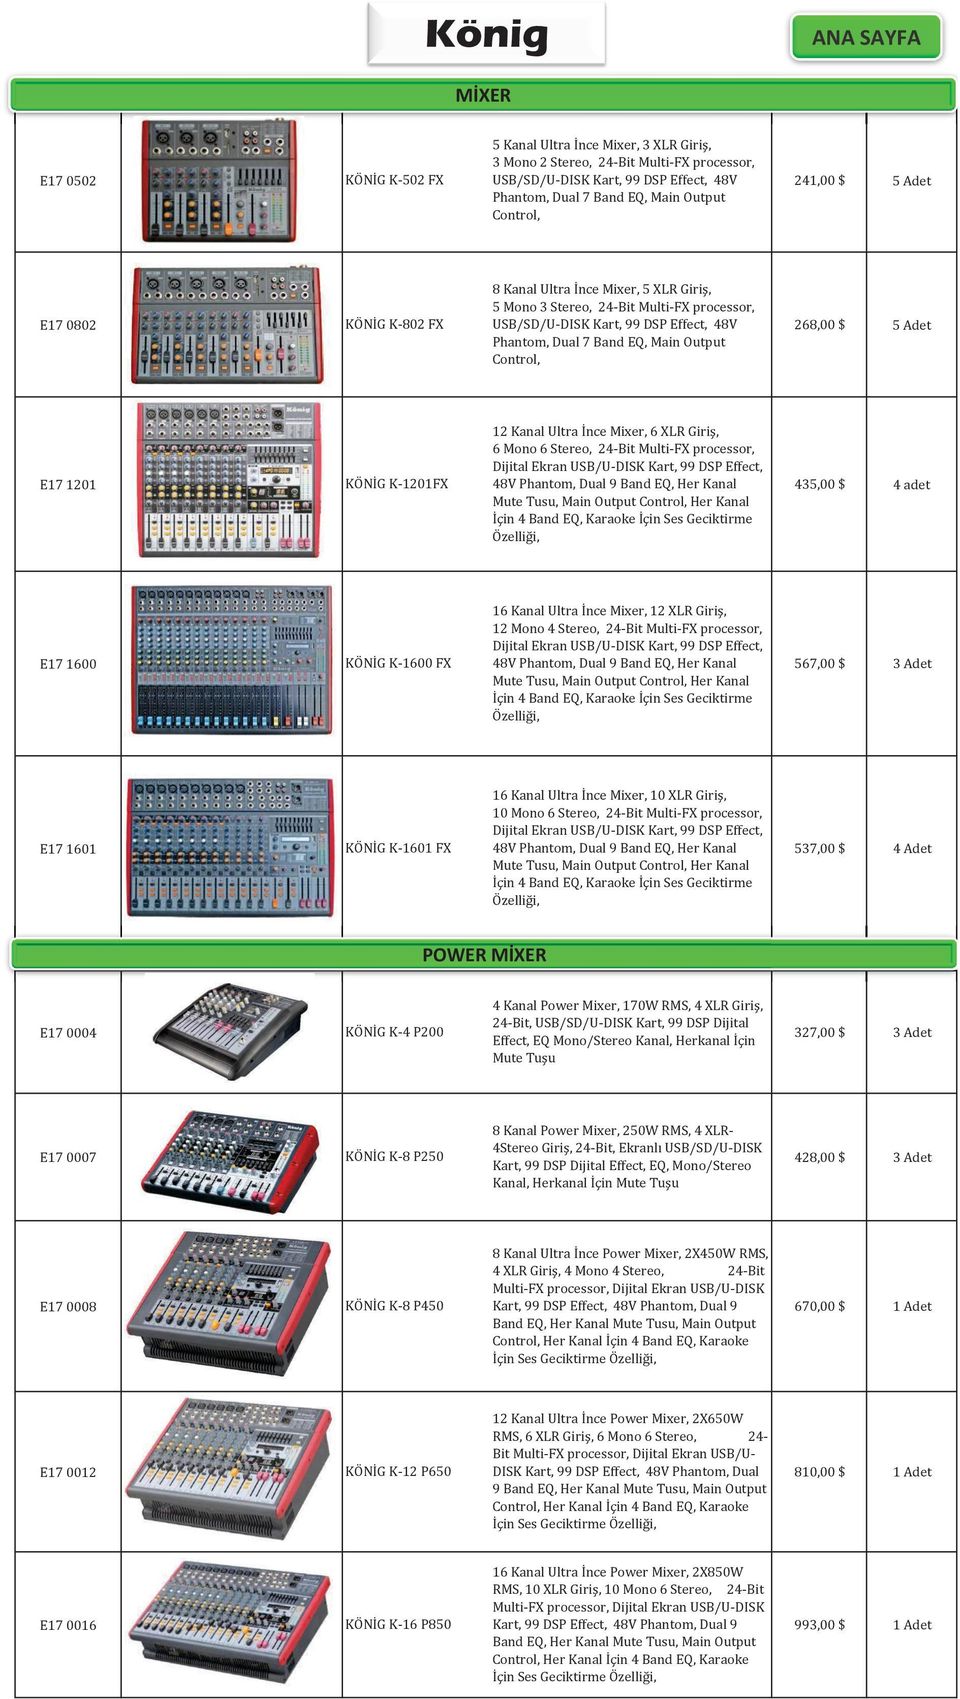 Phantom, Dual 7 Band EQ, Main Output Control, 12 Kanal Ultra İnce Mixer, 6 XLR Giriş, 6 Mono 6 Stereo, 24-Bit Multi-FX processor, Dijital Ekran USB/U-DISK Kart, 99 DSP Effect, E17 1201 KÖNİG K-1201FX